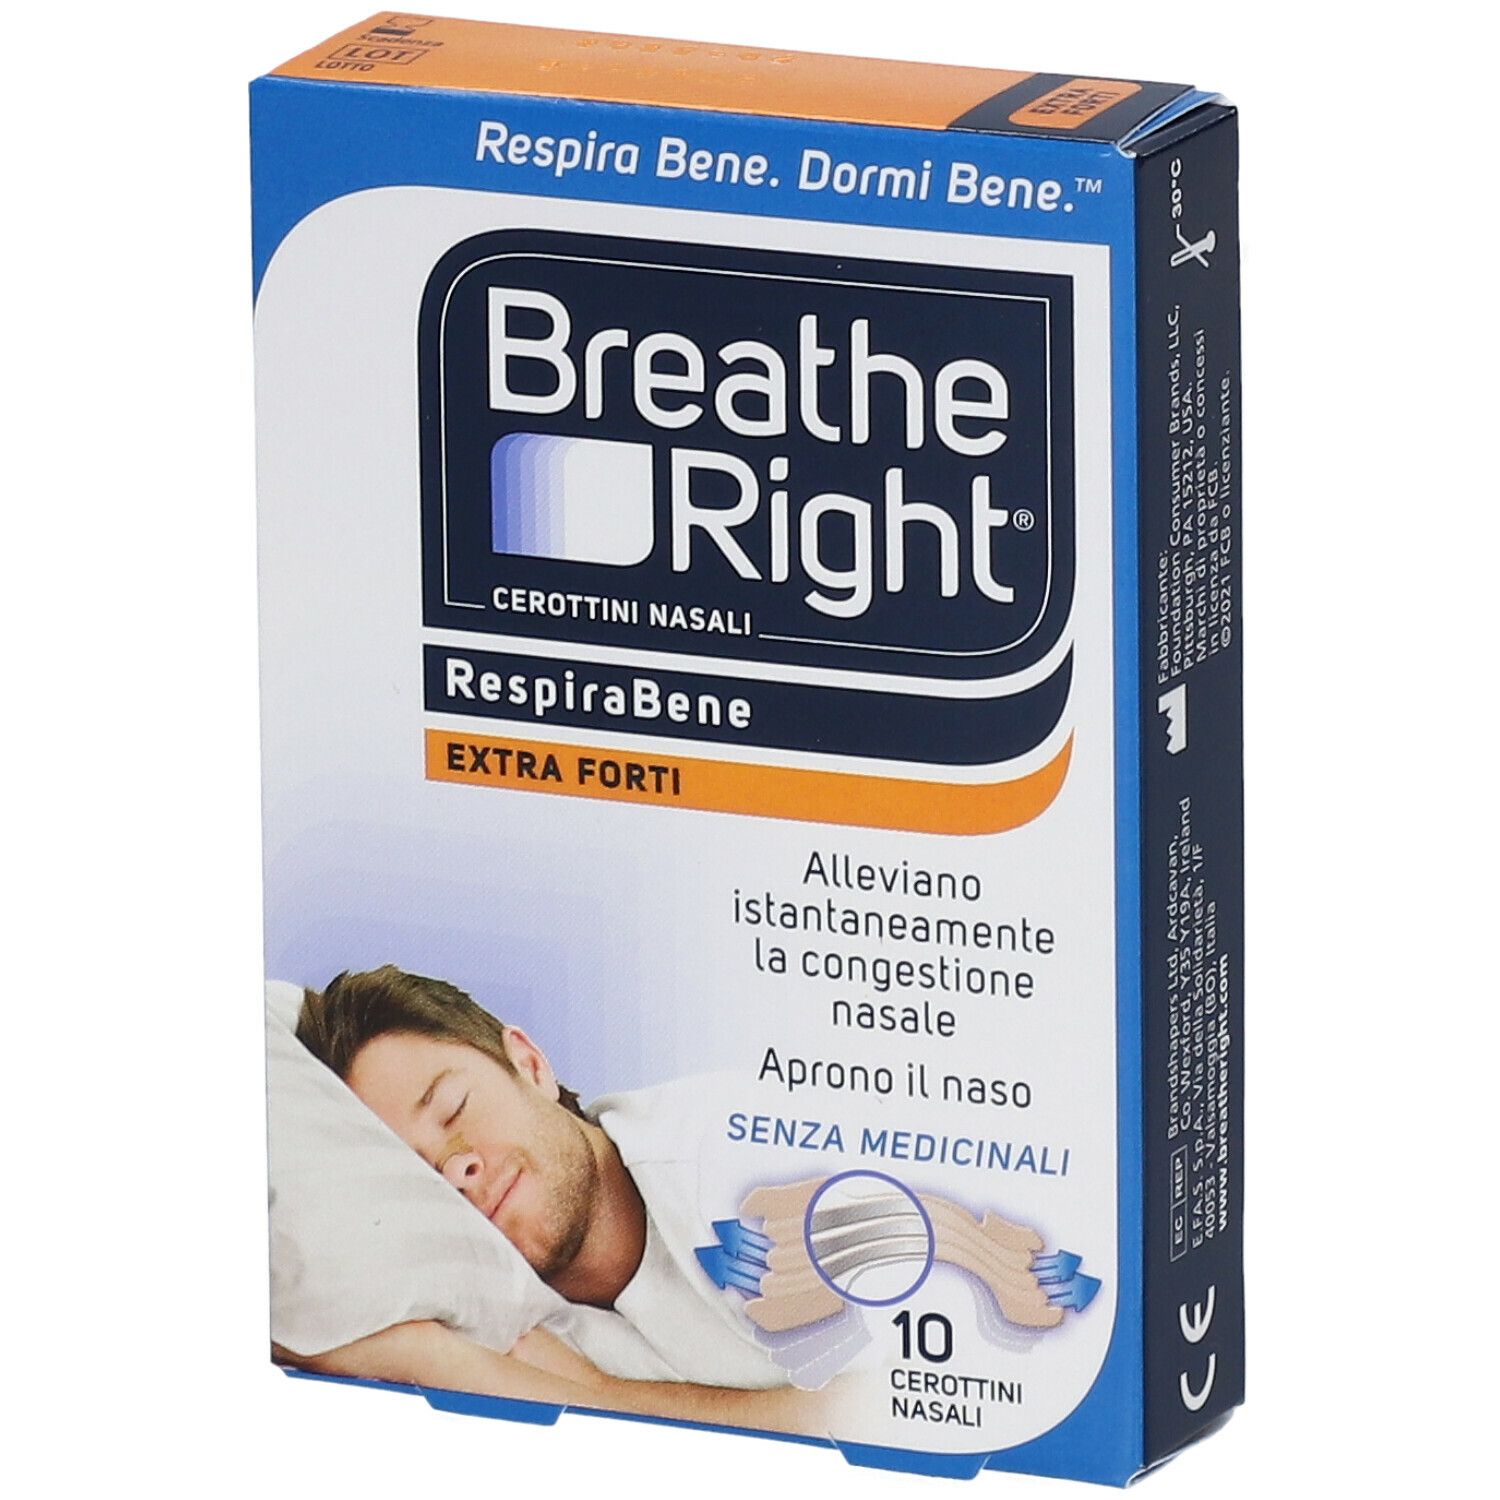 Breathe Right® RespiraBene Extra Forti